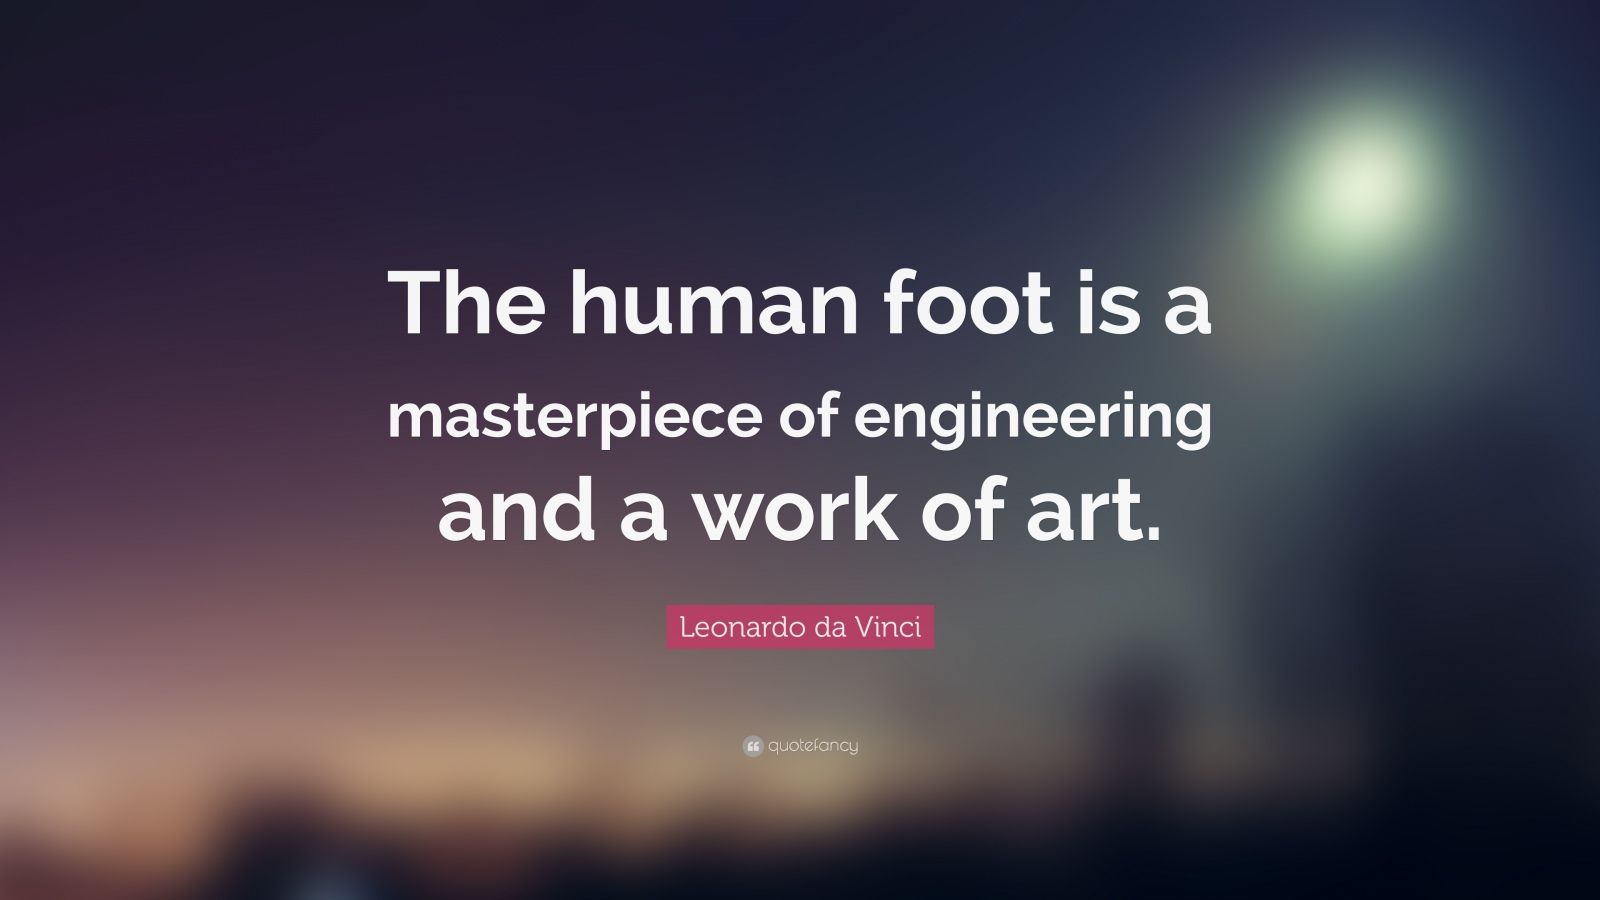 Leonardo da Vinci Quote “The human foot is a masterpiece